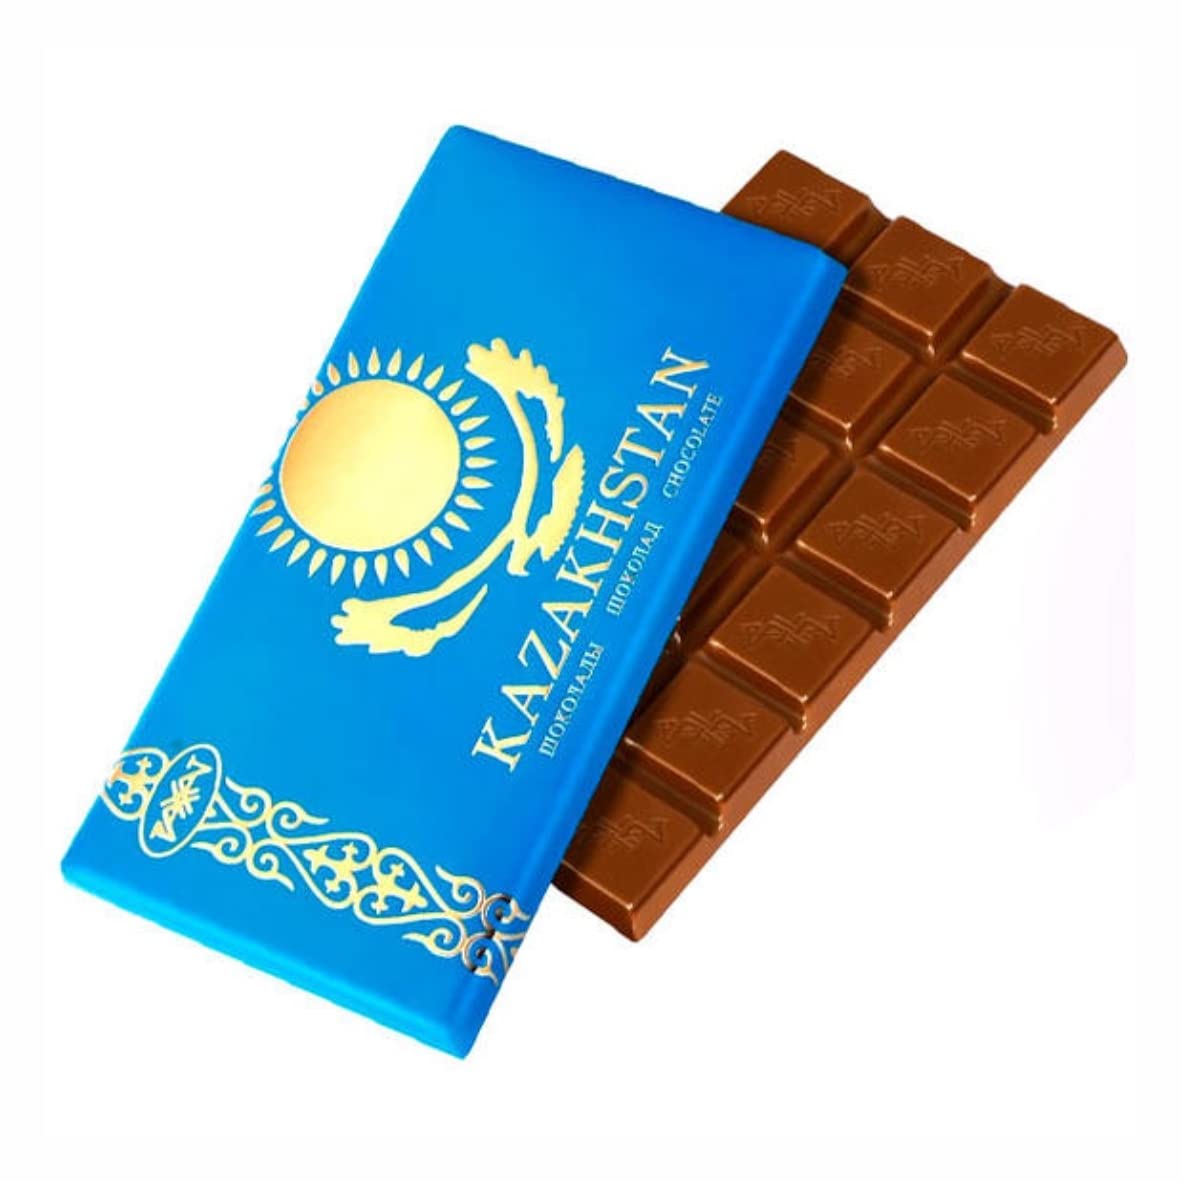 Kazakh Chocolate